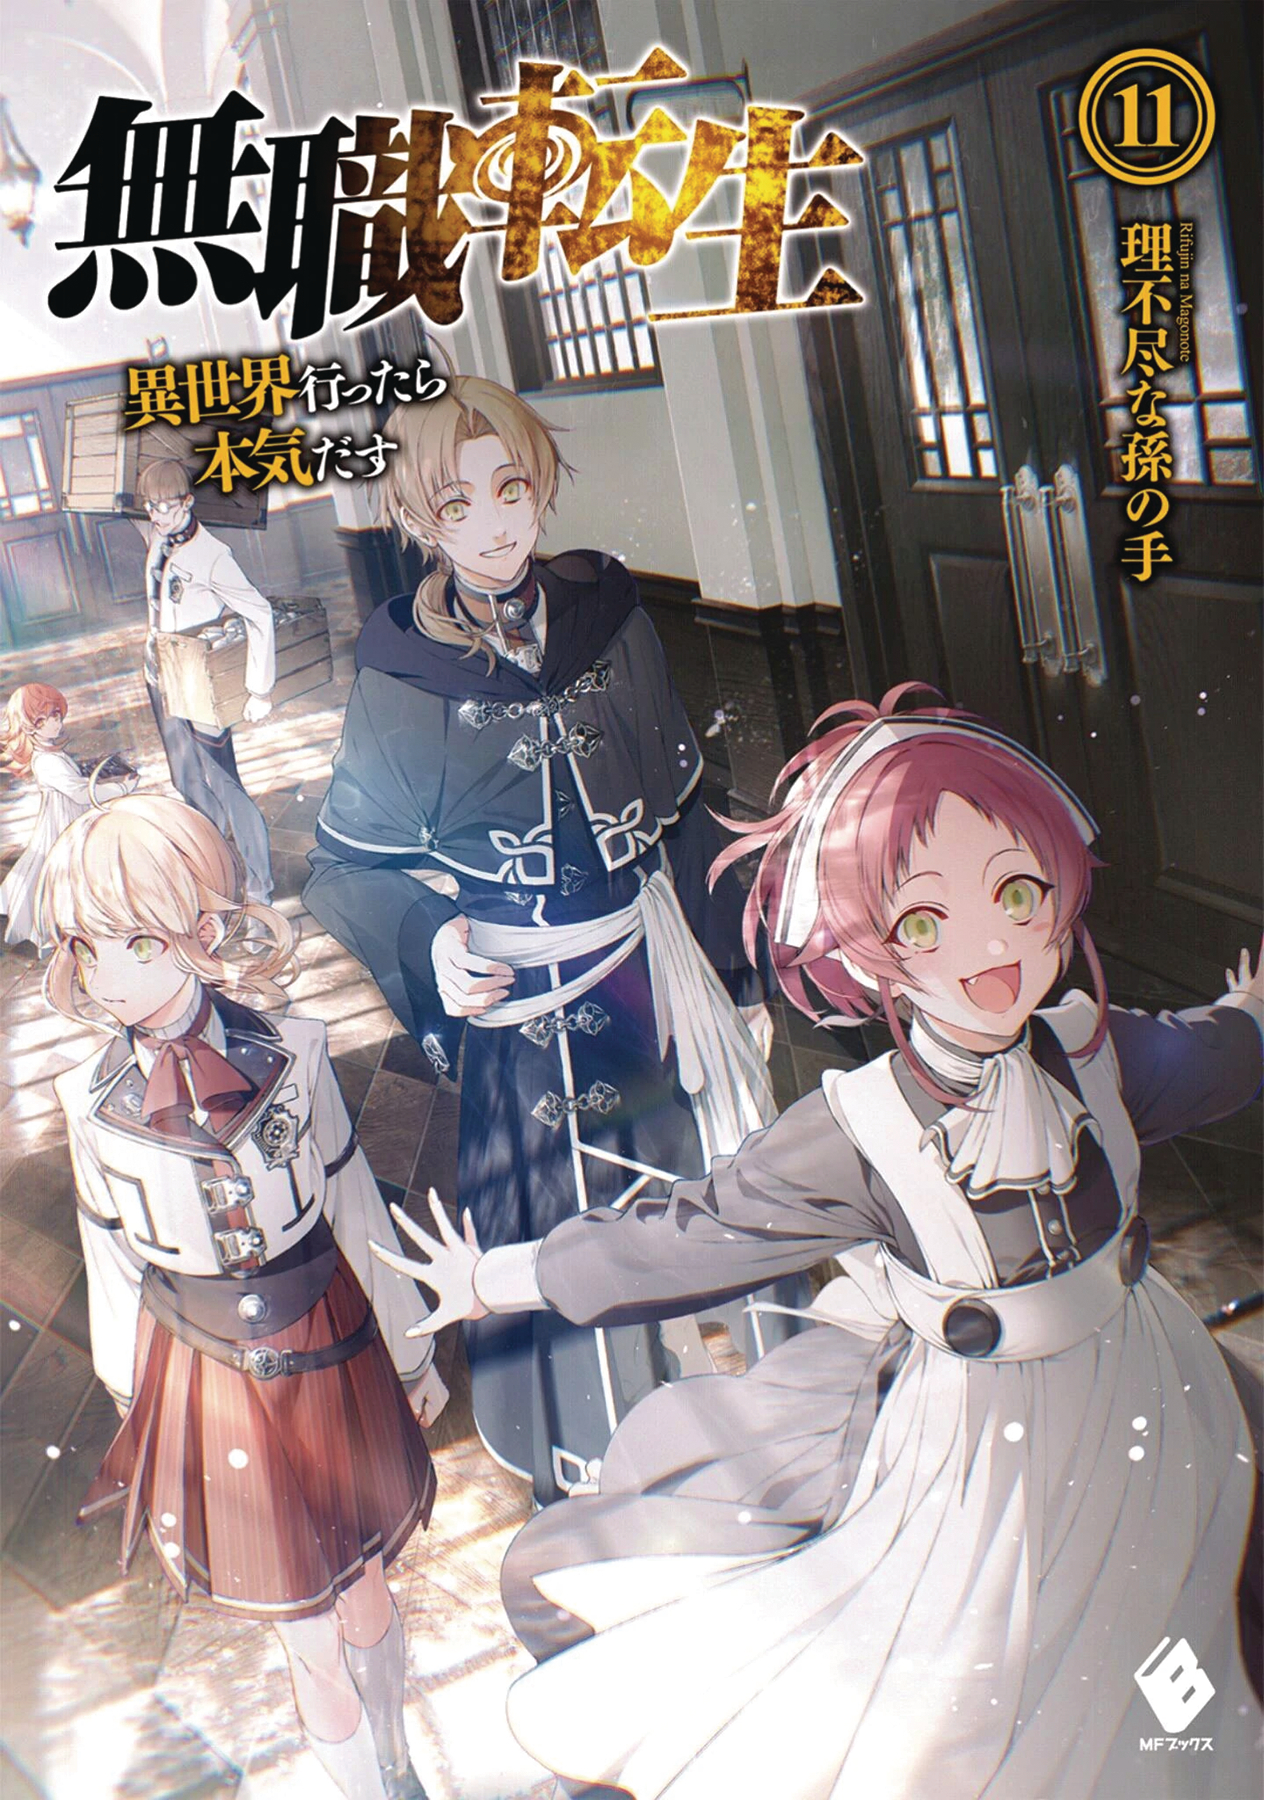 Mushoku Tensei Jobless Reincarnation Light Novel Volume 11